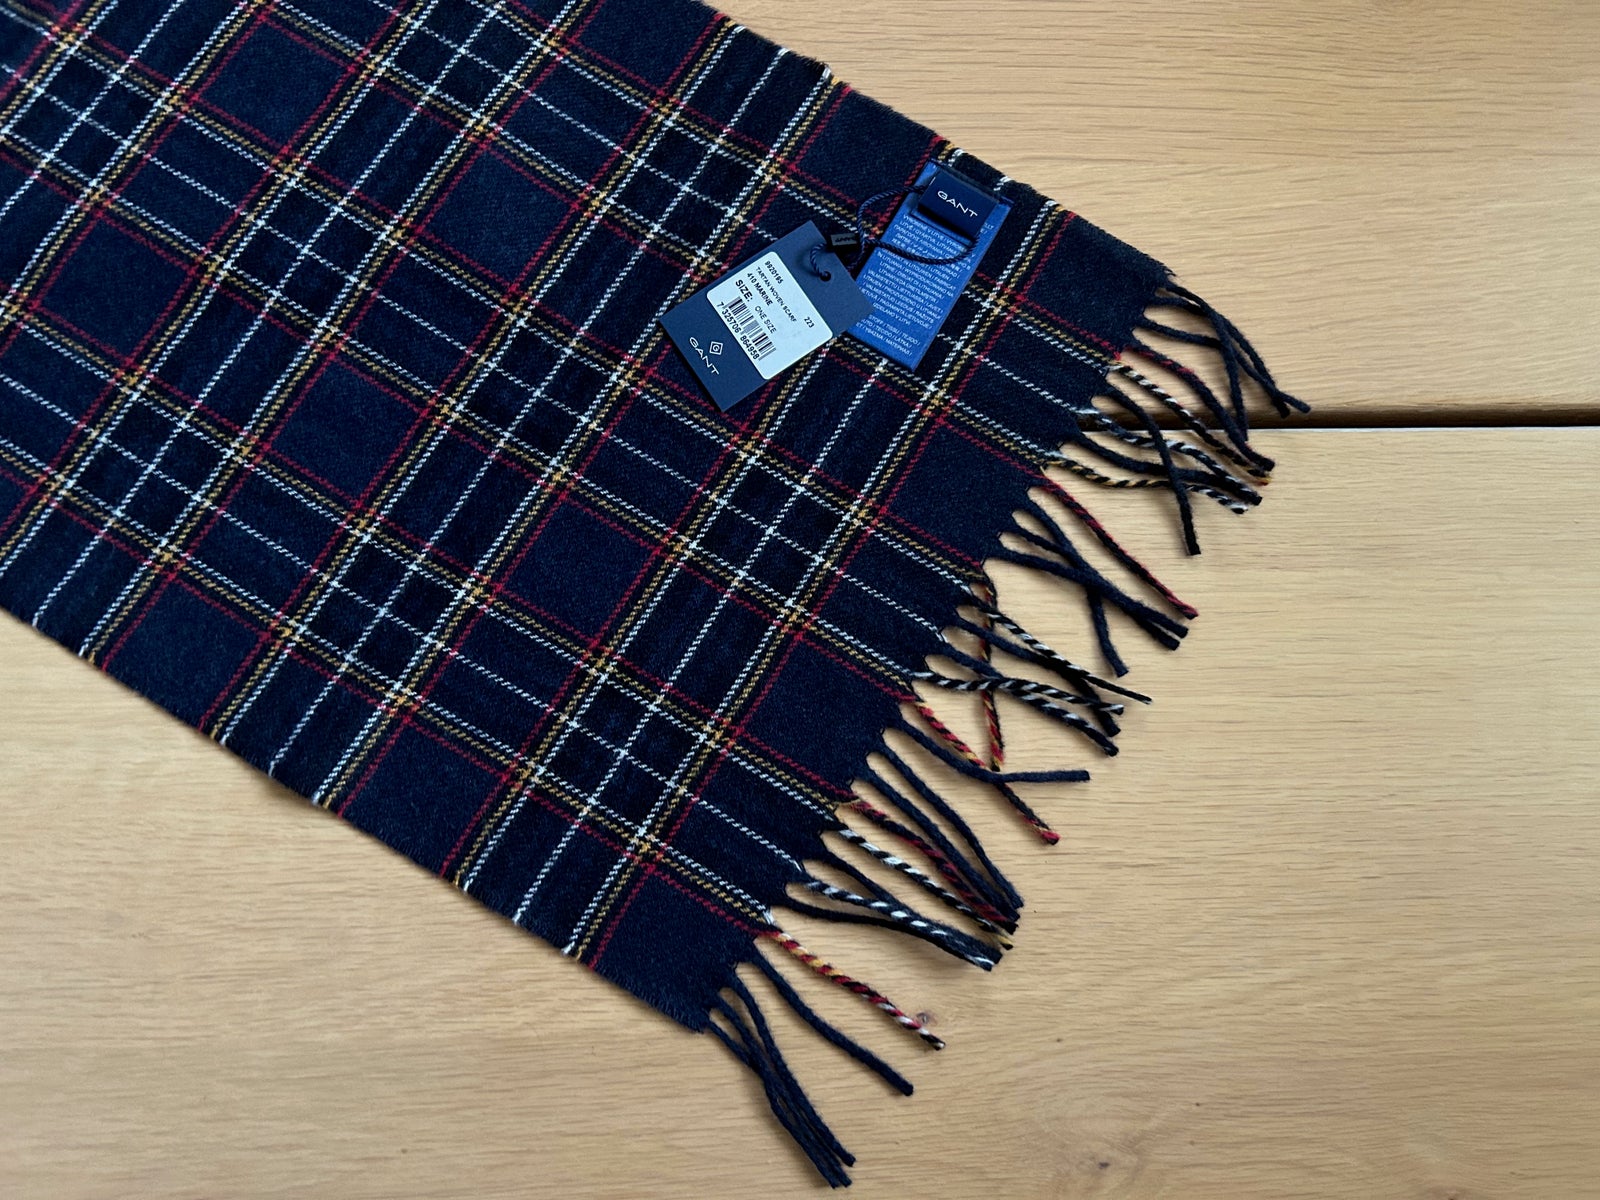 Halstørklæde, GANT, str. 30 x 180 cm